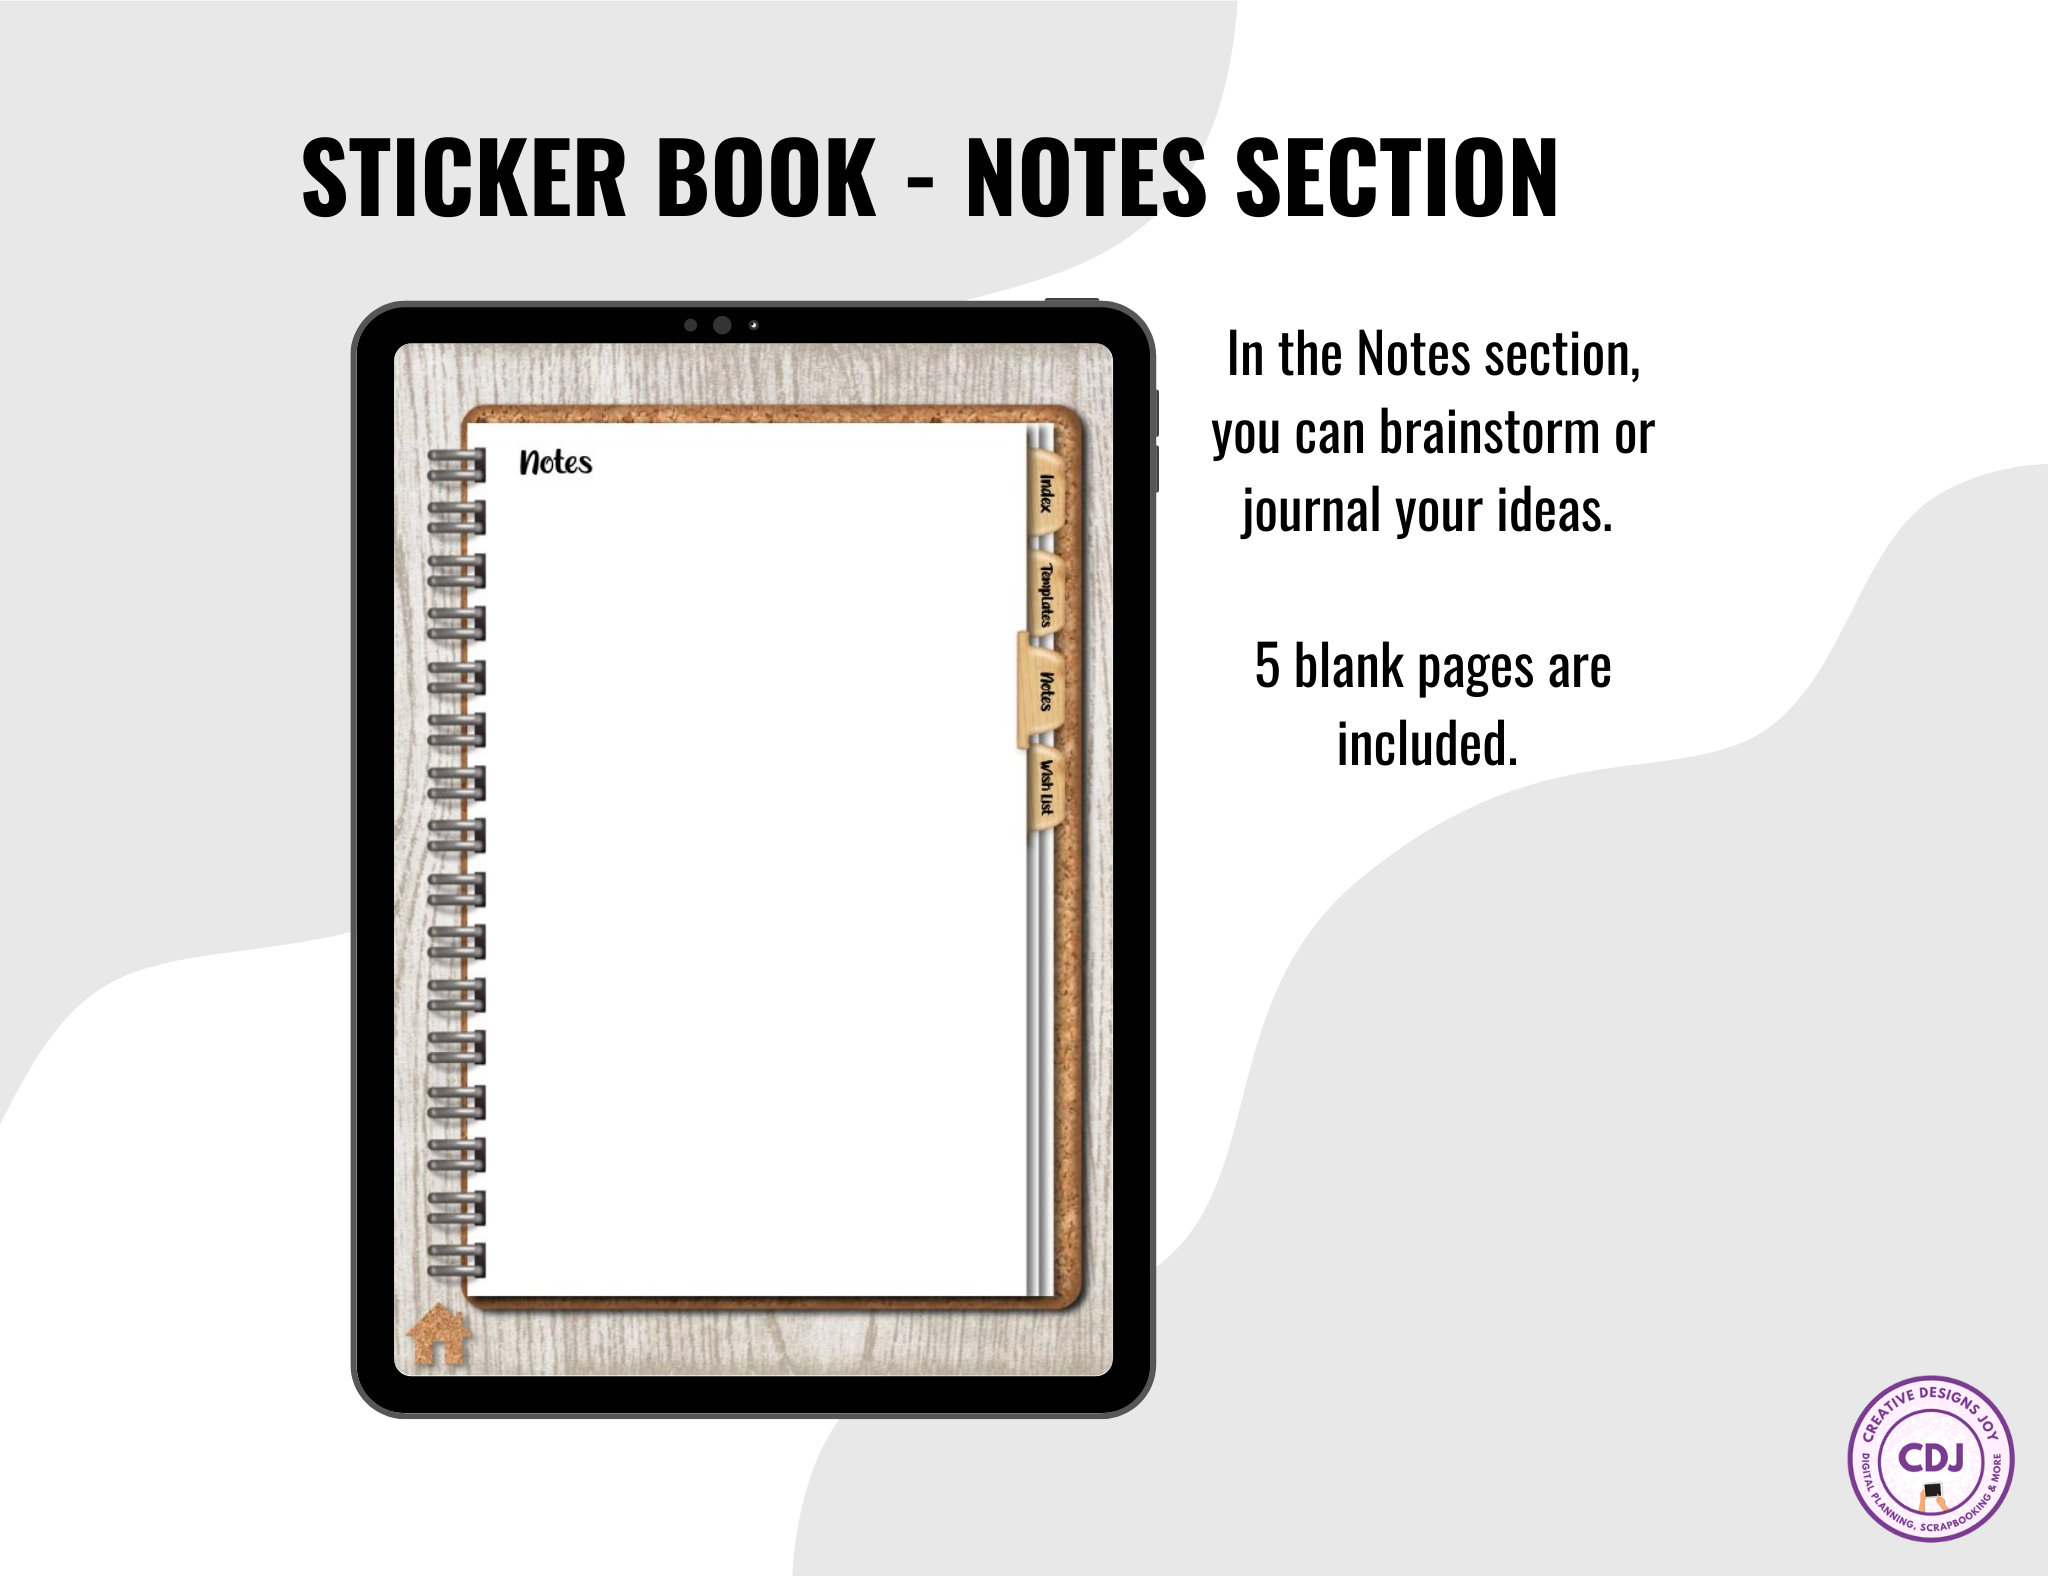 Digital Sticker Books, 3 Blank Sticker Books, Chalkboard, Cork Board, and  Kraft Styles, Portrait View for Digital Stickers & Planning 